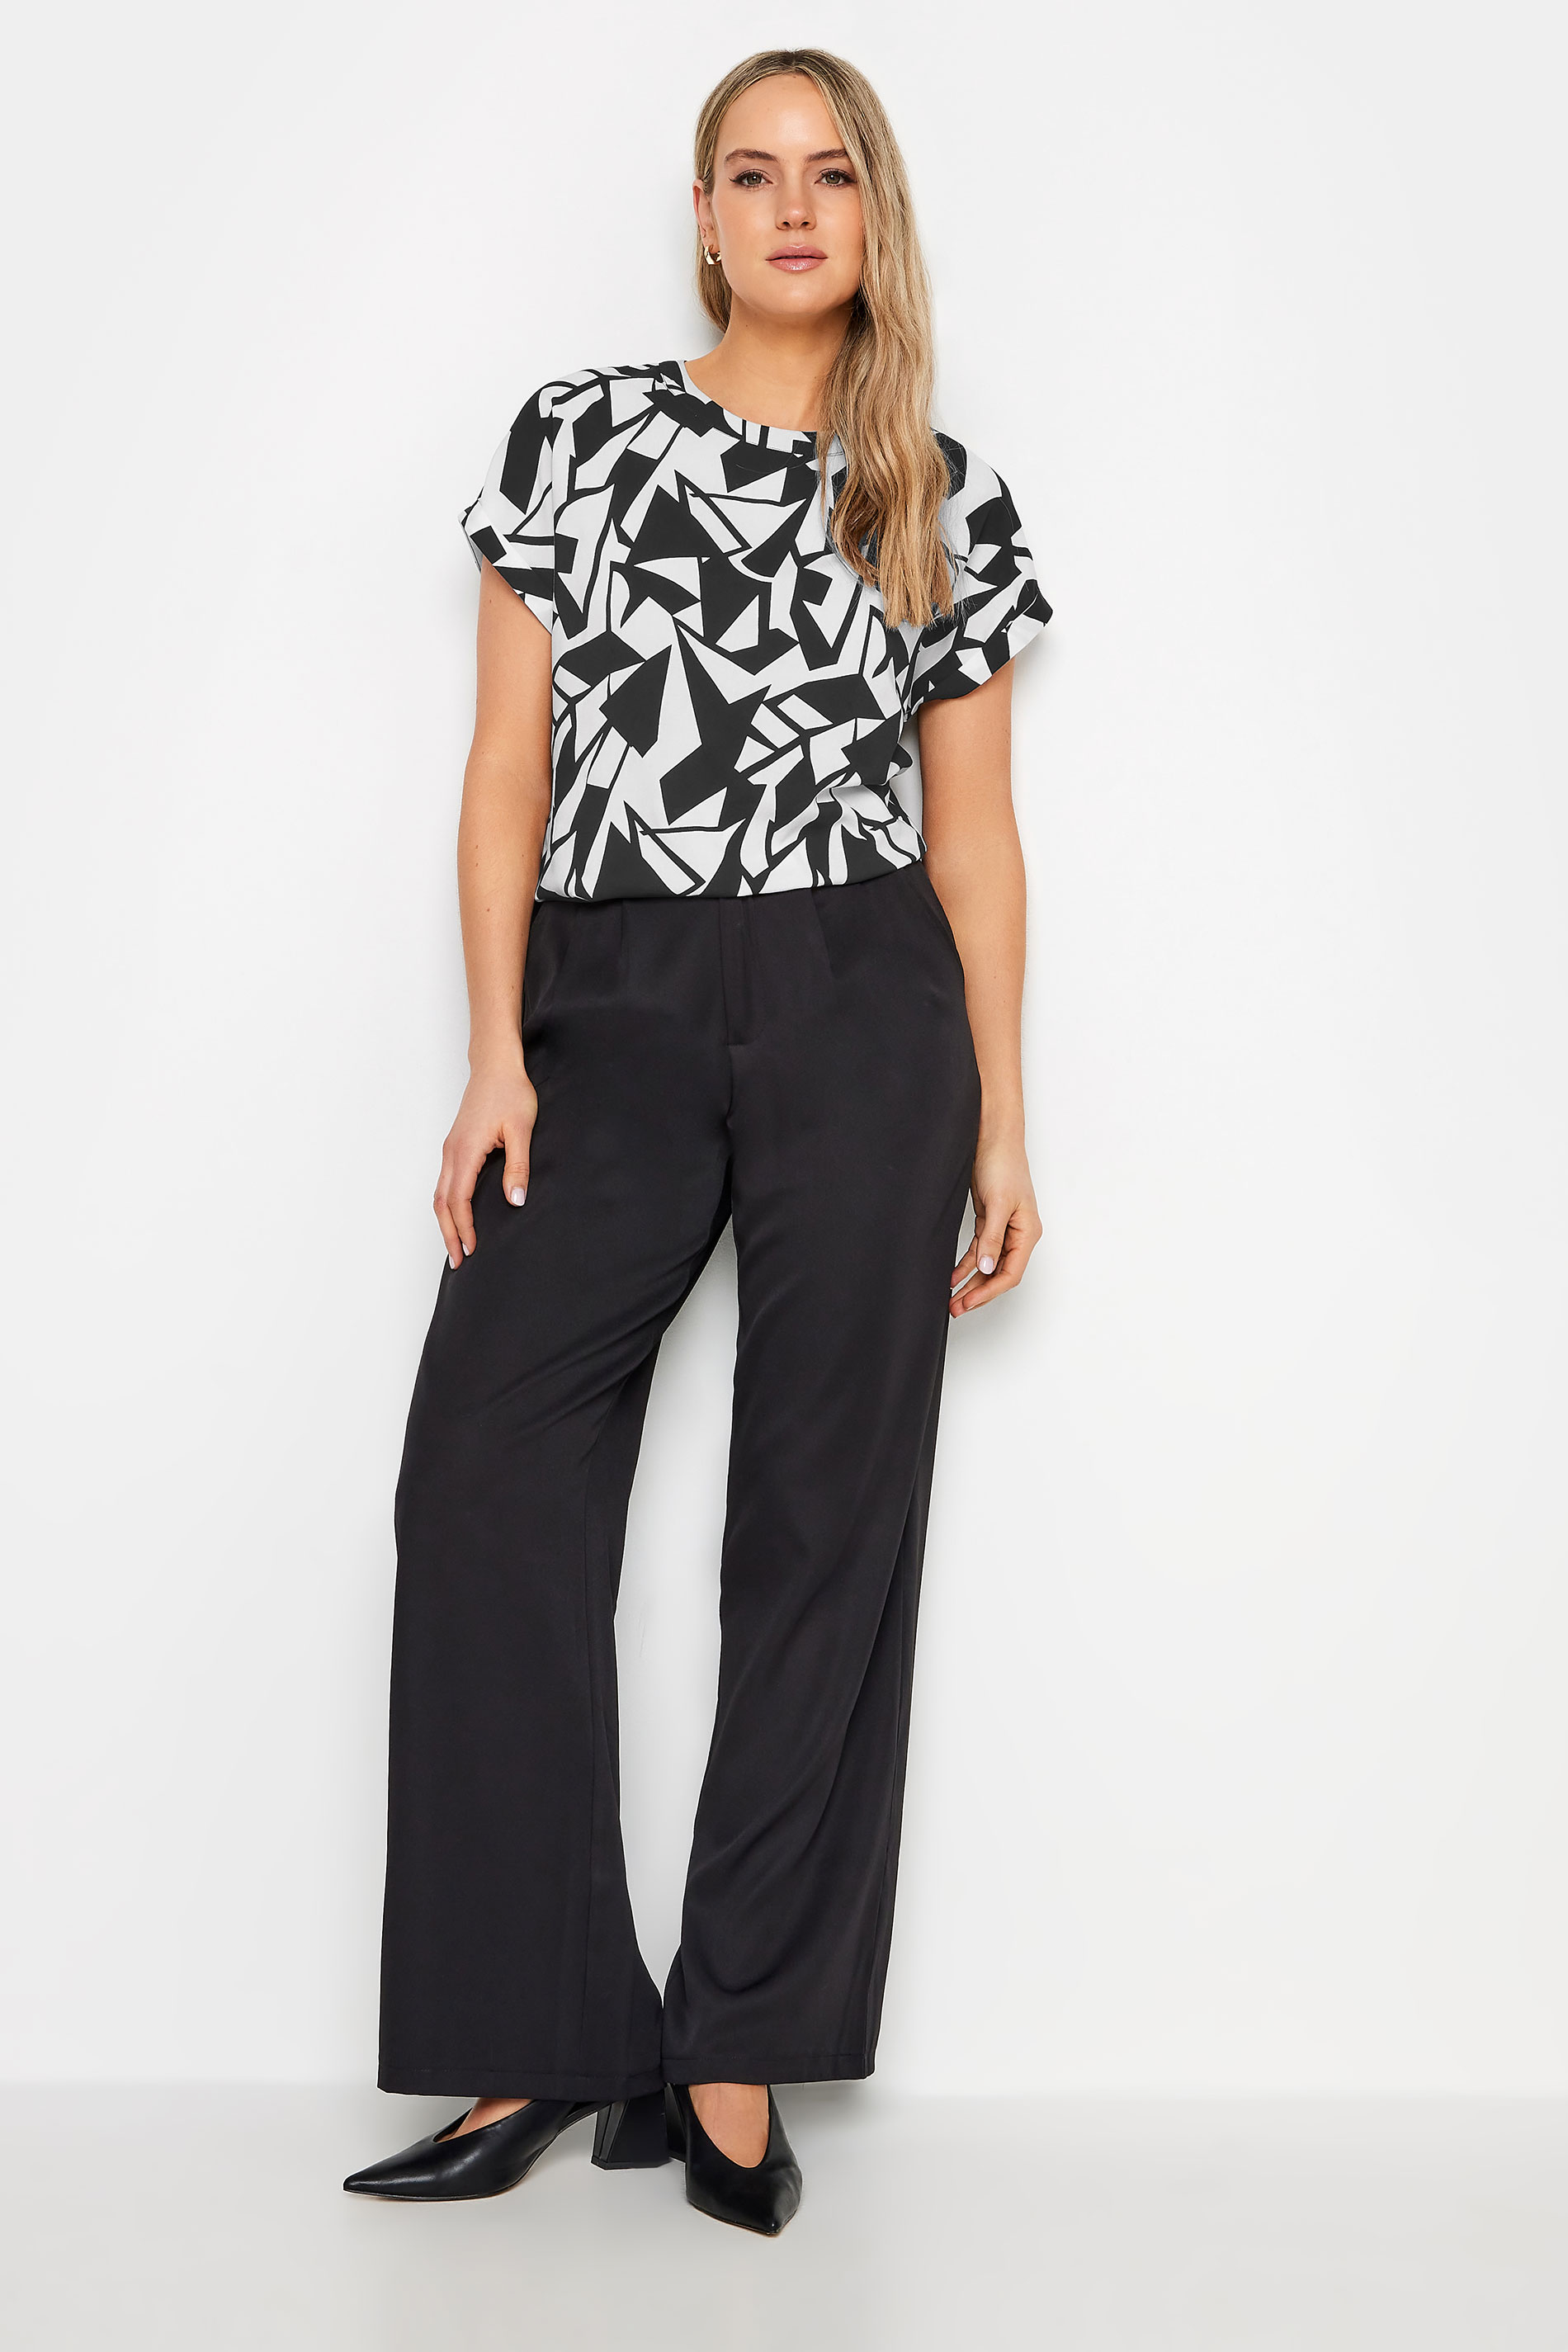 LTS Tall Womens Black & White Abstract Print Short Sleeve Blouse | Long Tall Sally 2